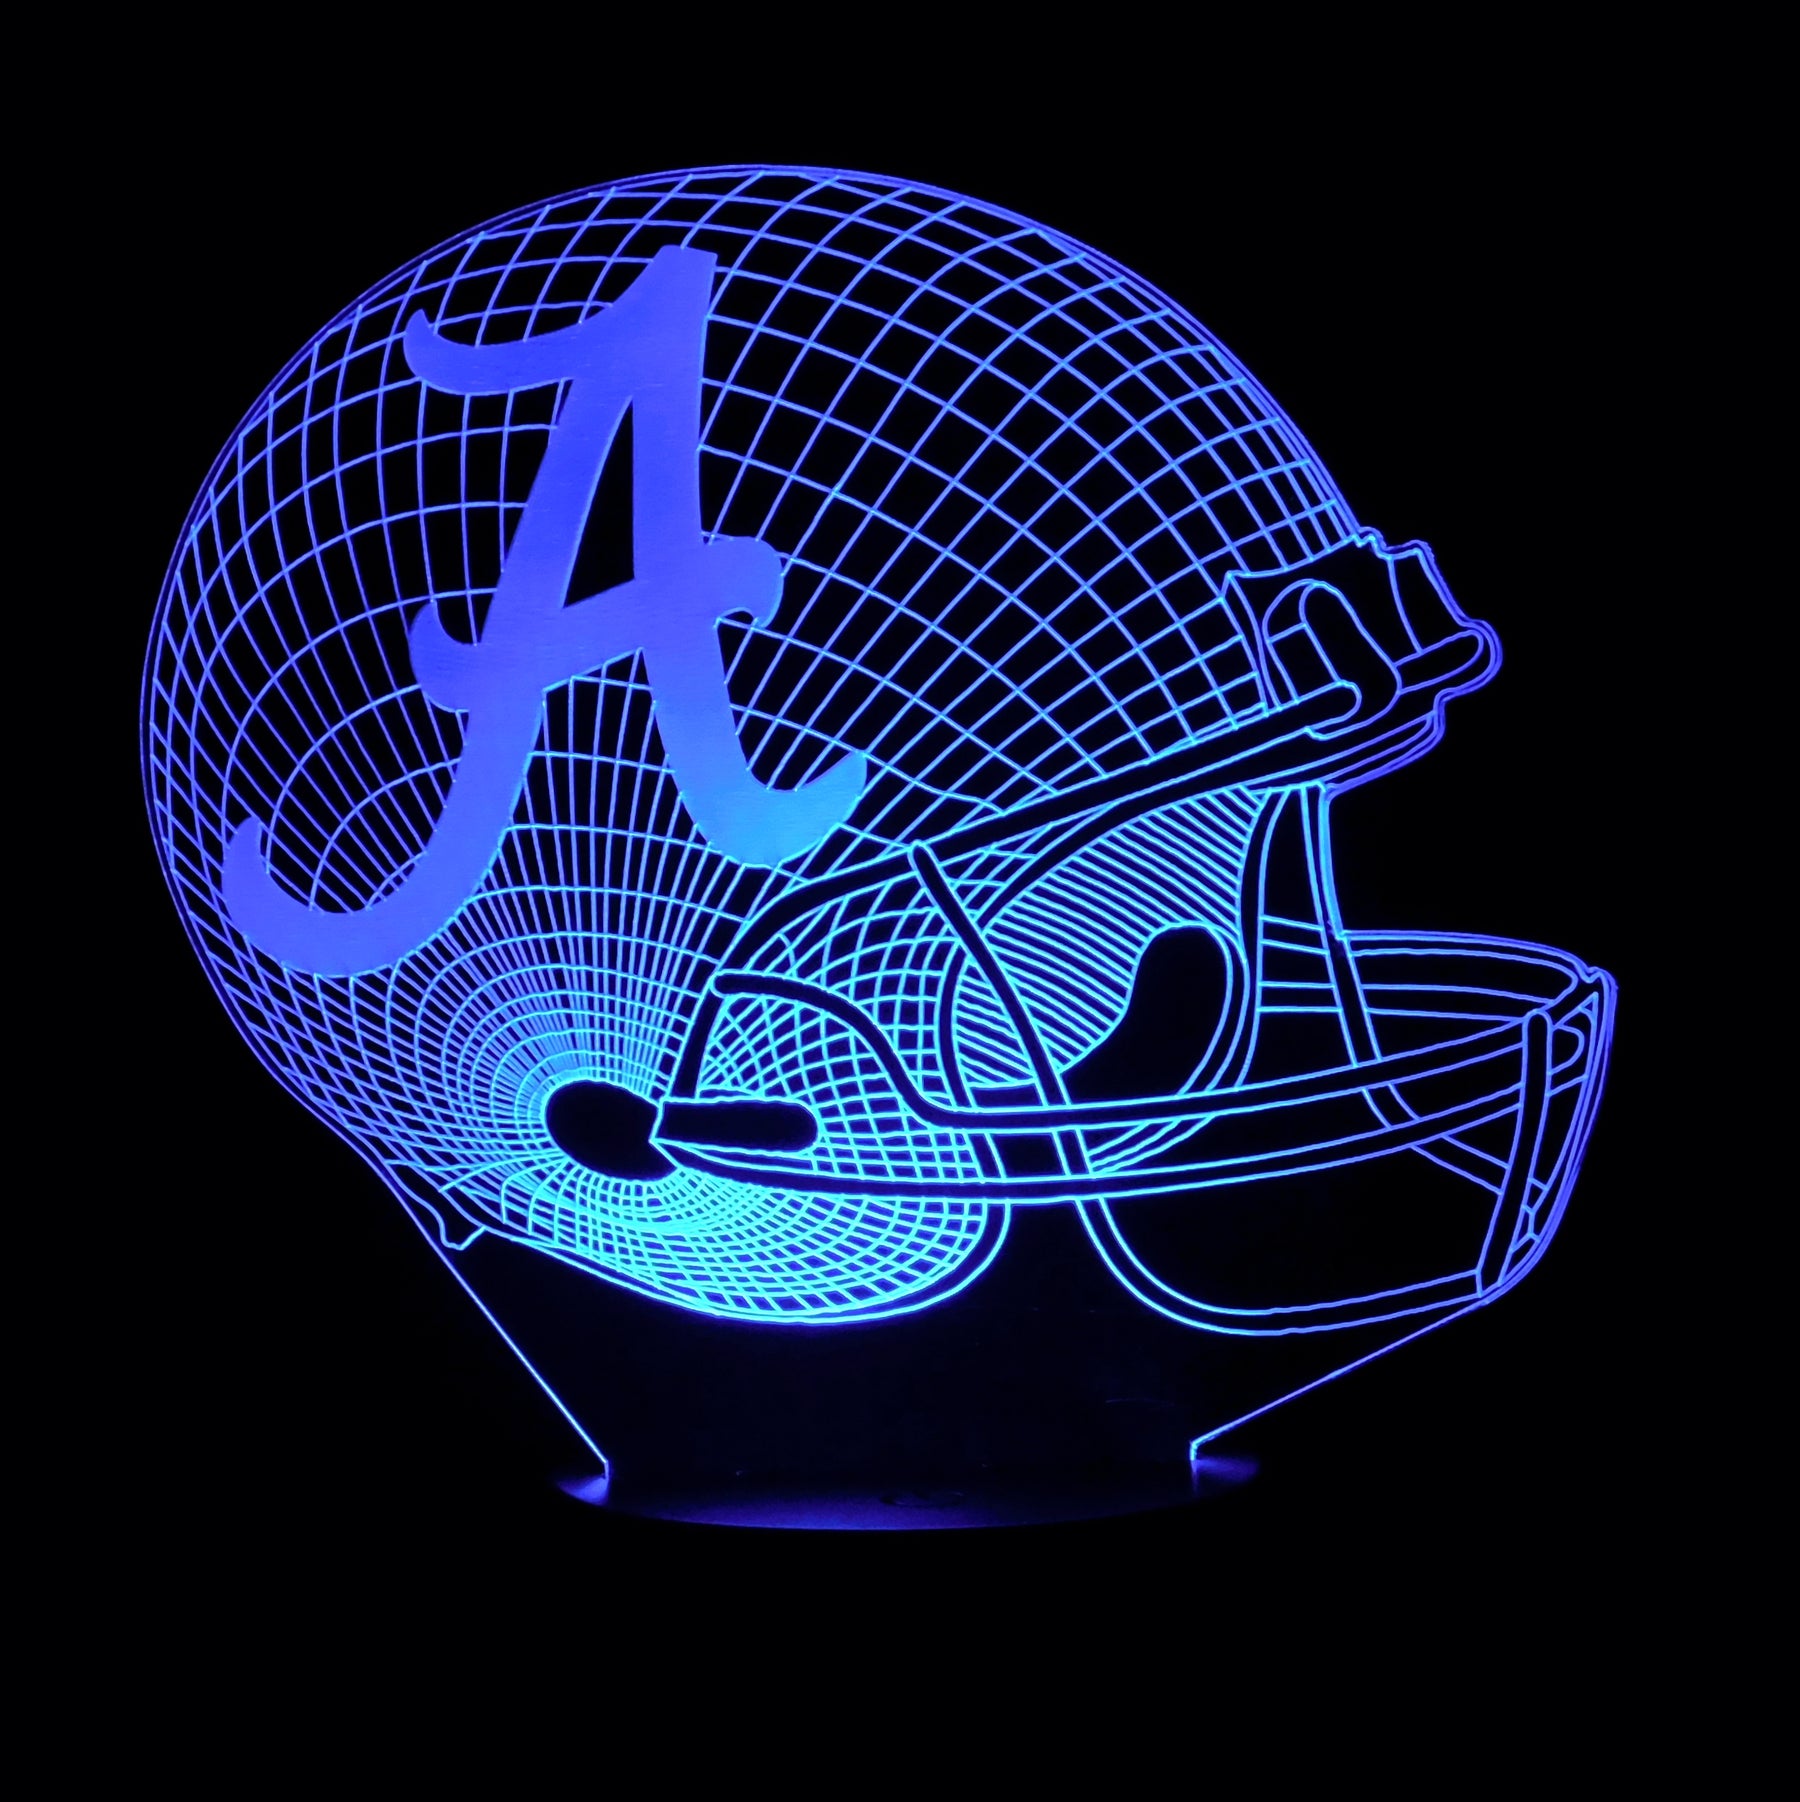 College League Football Helmet 3-D Optical Illusion Multicolored LED Lamp